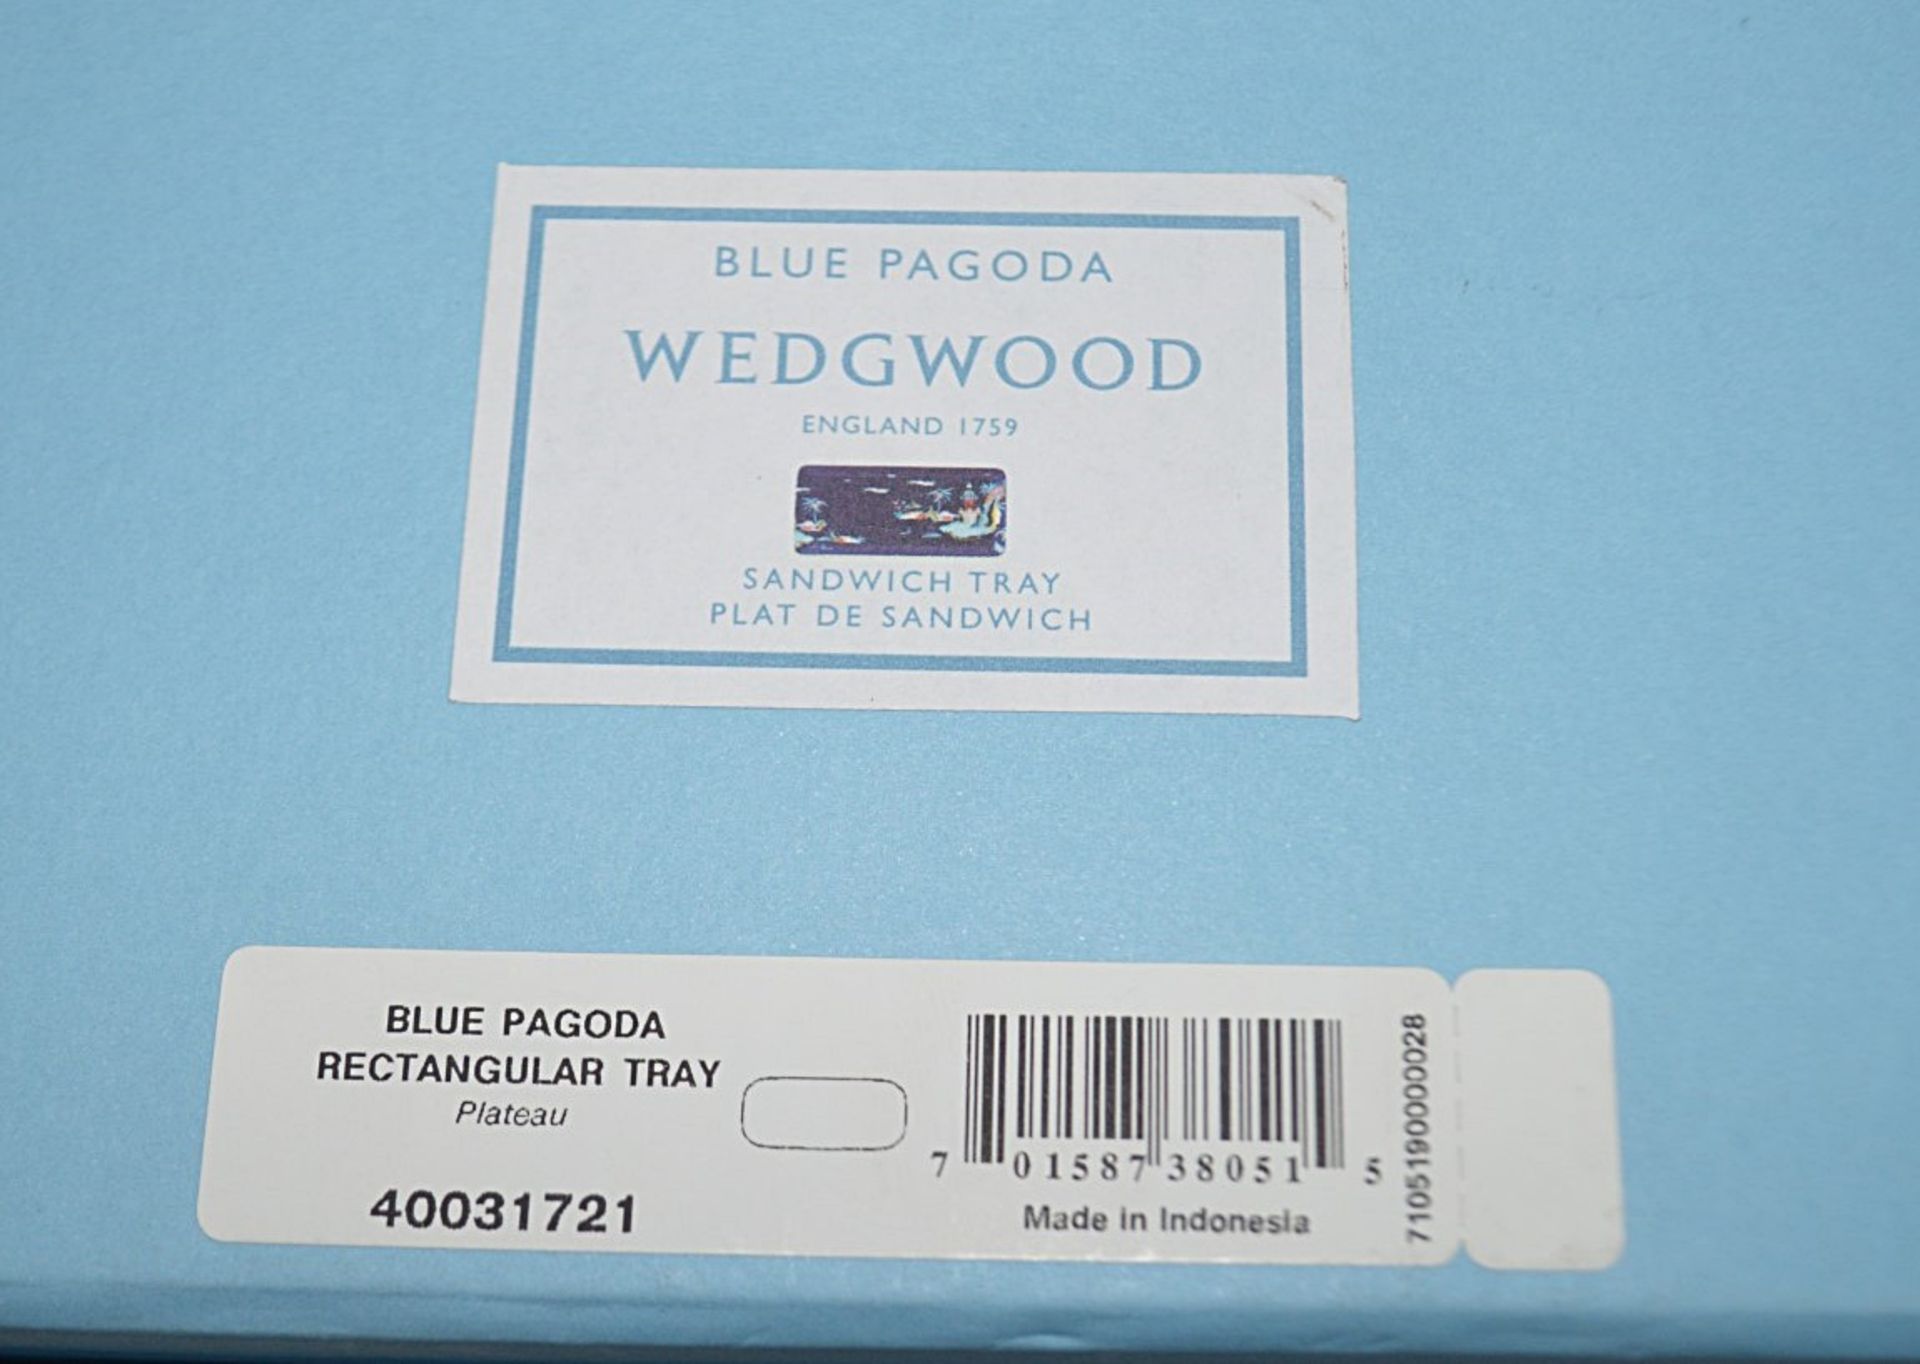 1 x WEDGWOOD 'Wonderlust' Blue Pagoda Sandwich Tray In It's Original Box - Original RRP £85.00 - Image 7 of 8